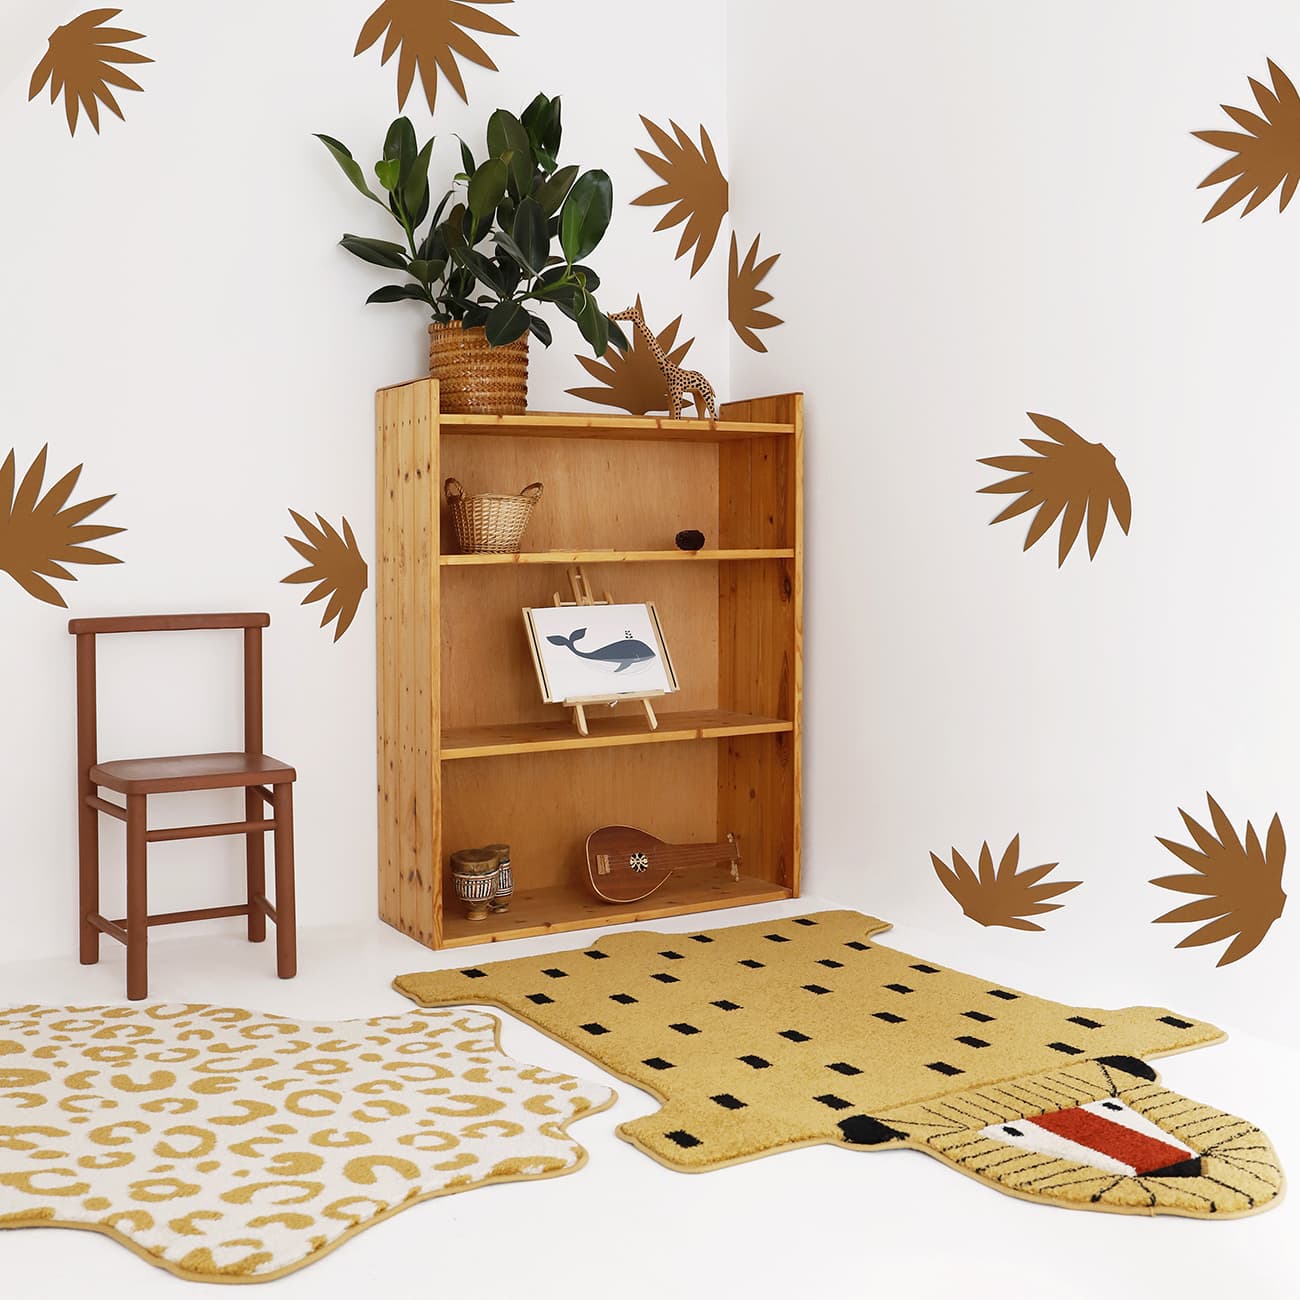 modern kid lion rug with geometric shapes